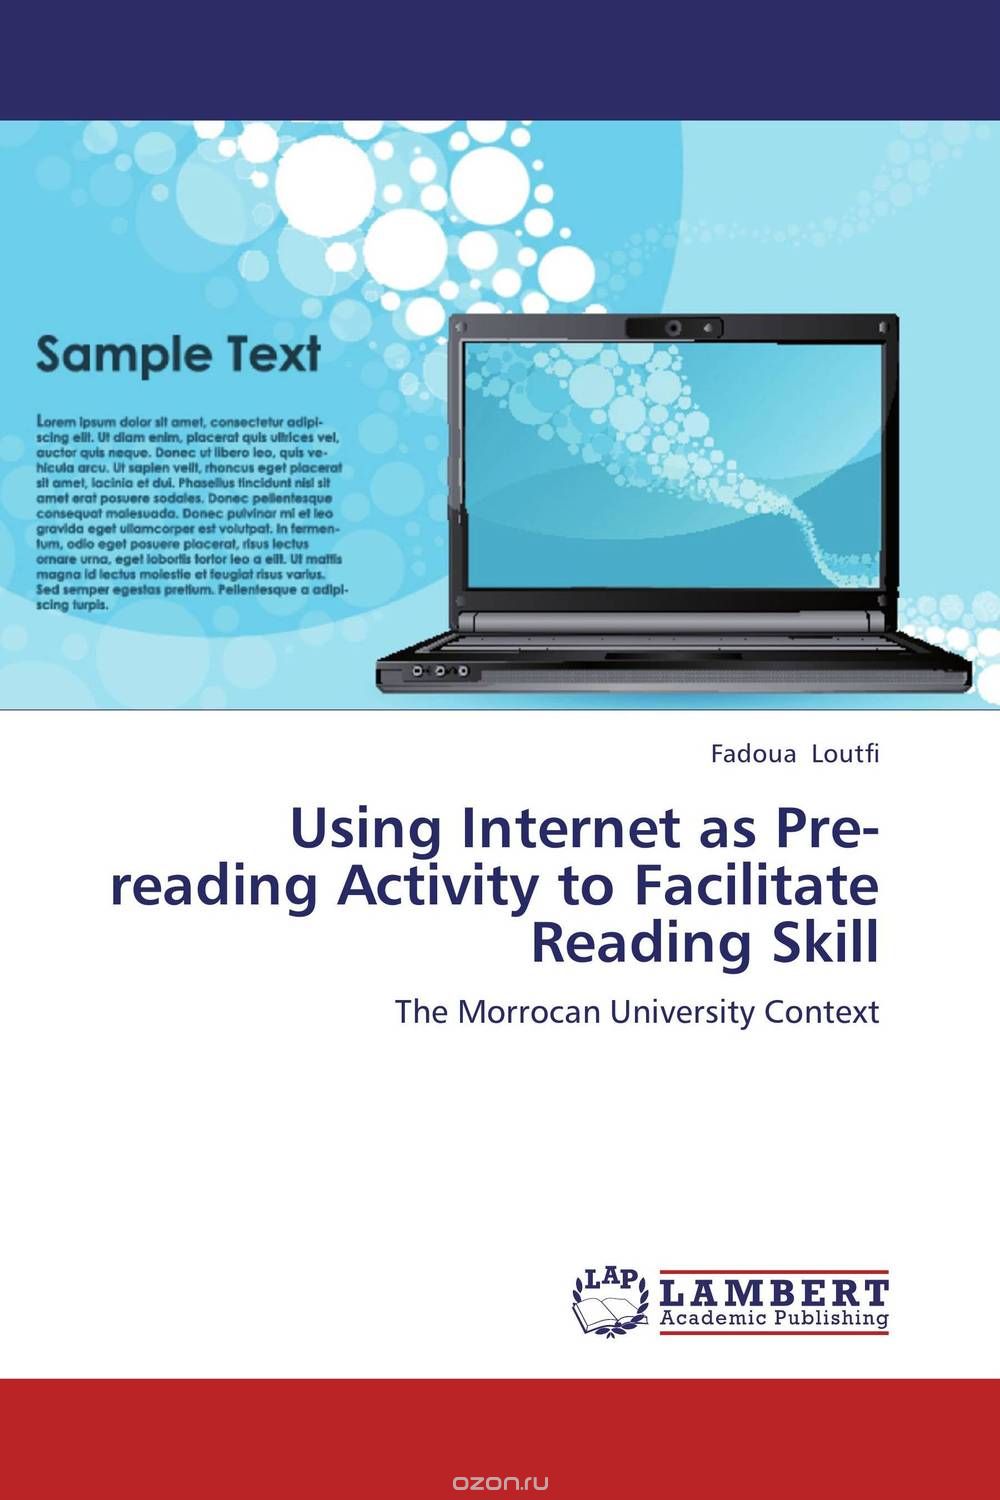 Скачать книгу "Using Internet as Pre-reading Activity to Facilitate Reading Skill"